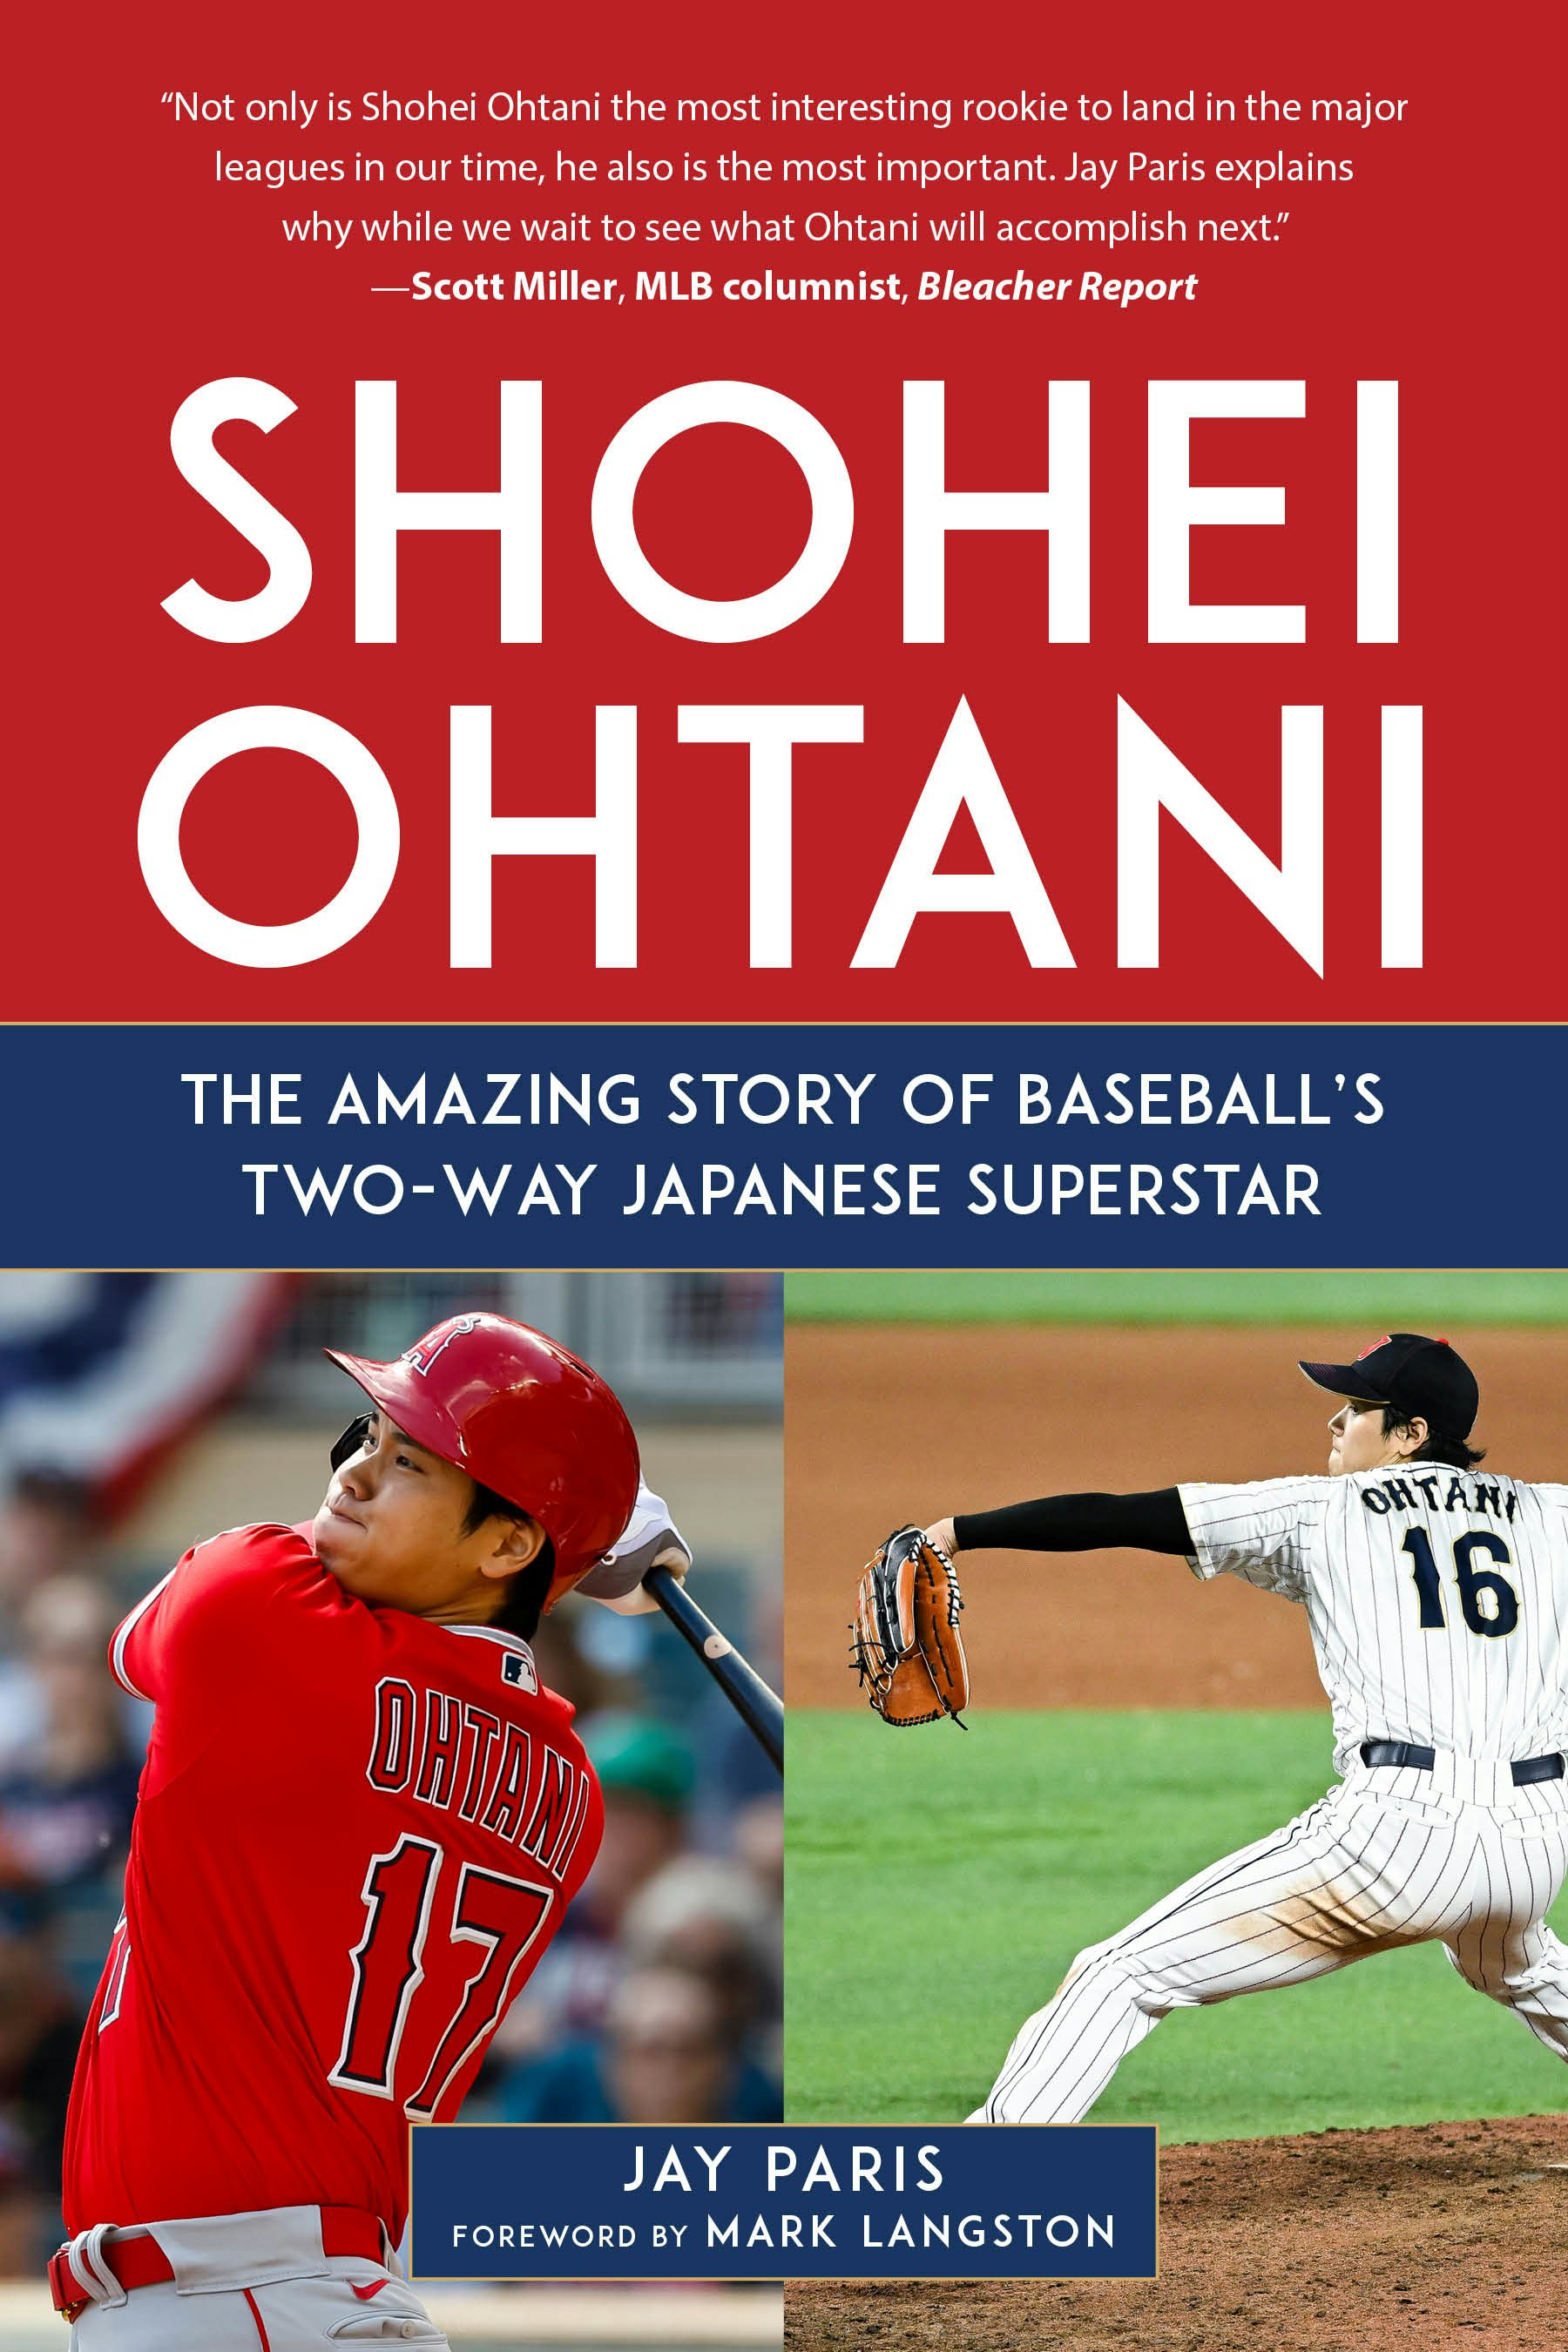 BASEBALL  TwoWay Star Shohei Ohtani Has a Flair for the Dramatic  JAPAN  Forward